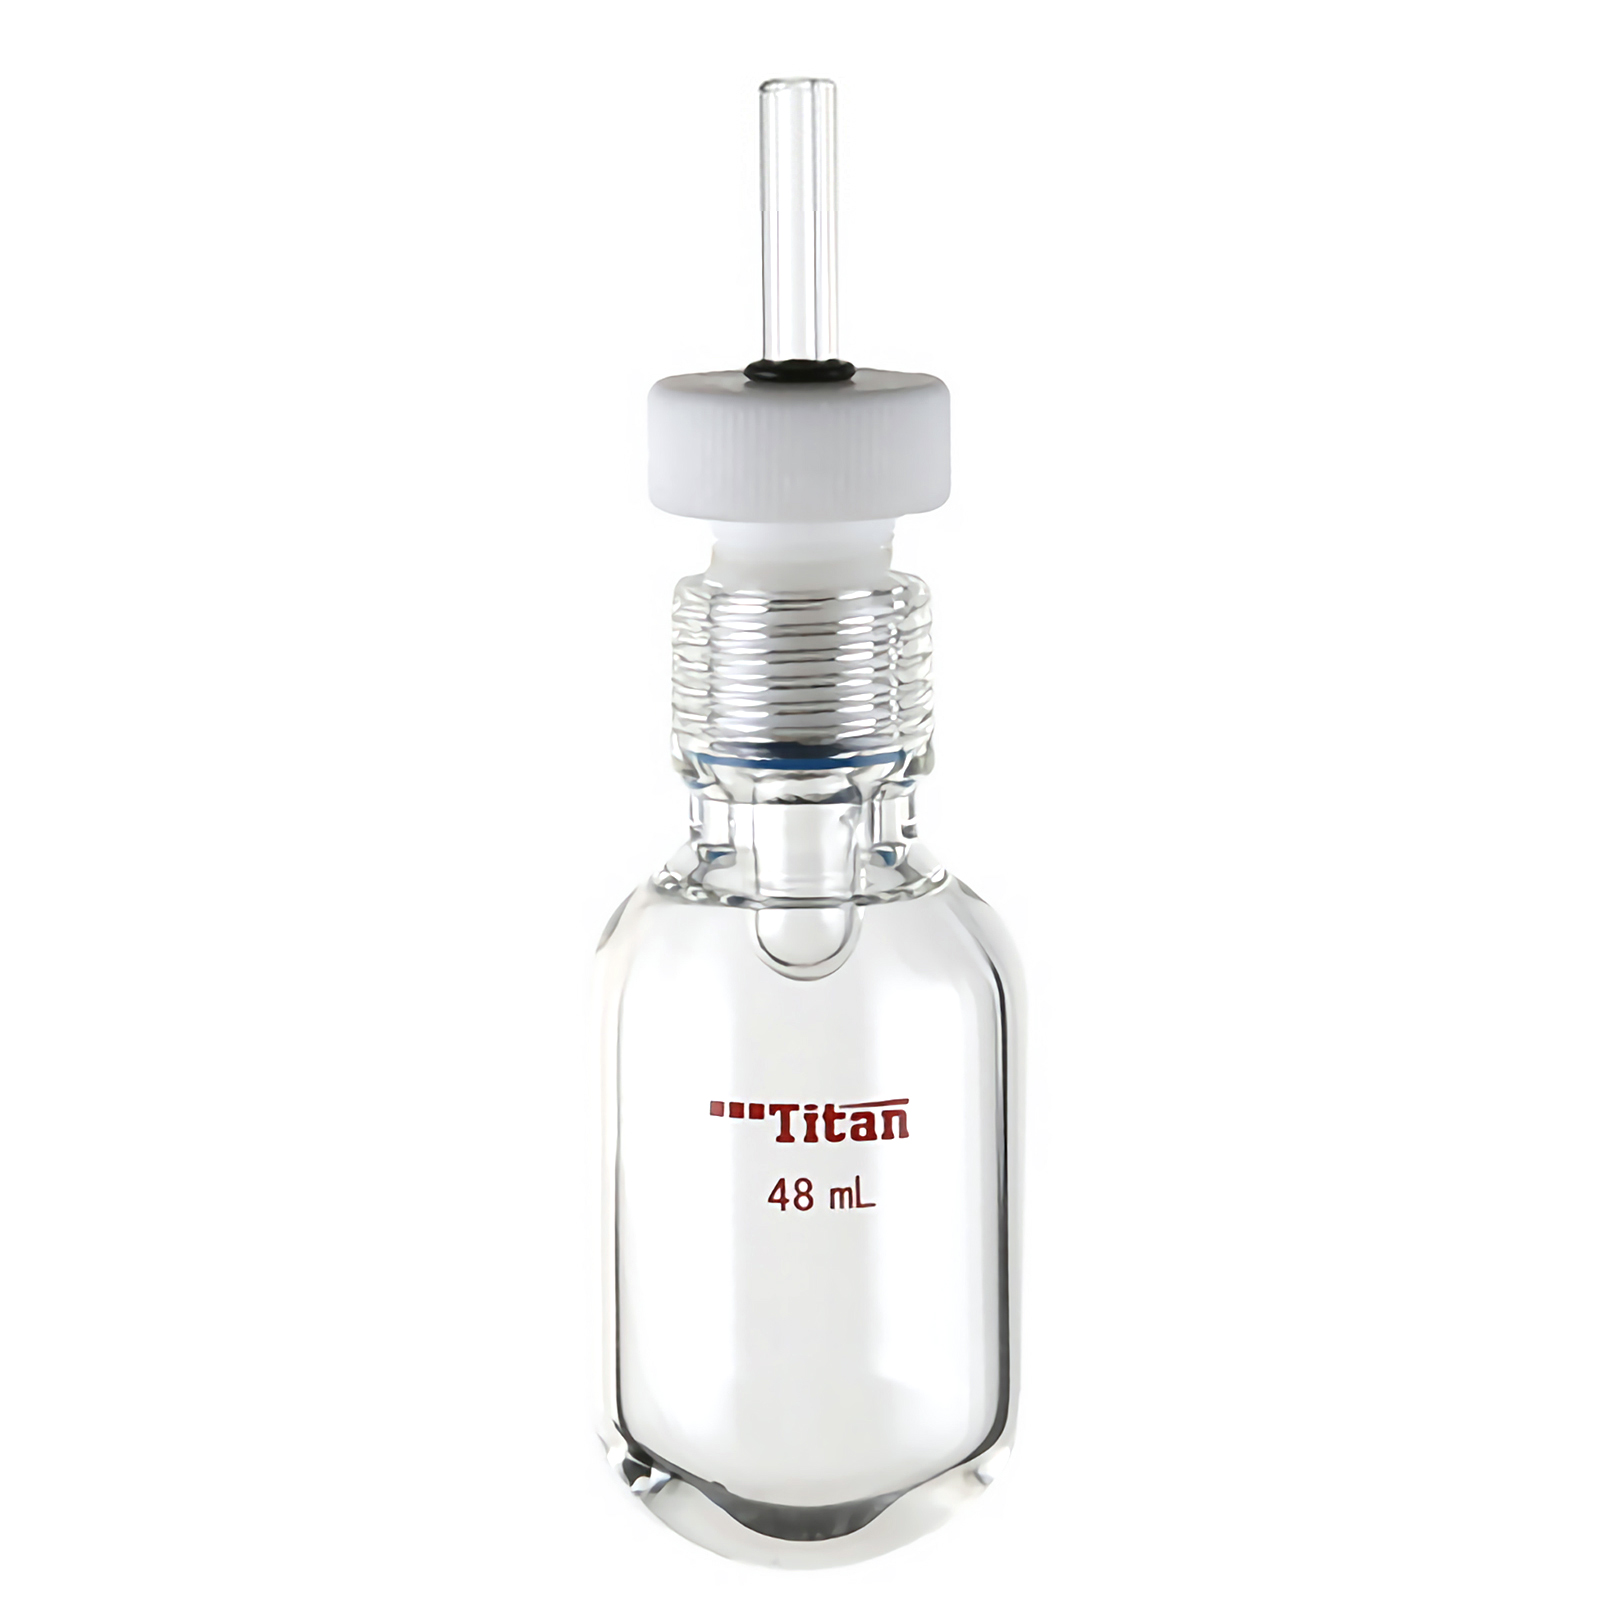 Wholesale 100pcs Mini Glass Bottles10ml 15ml 20ml 25ml 30ml 